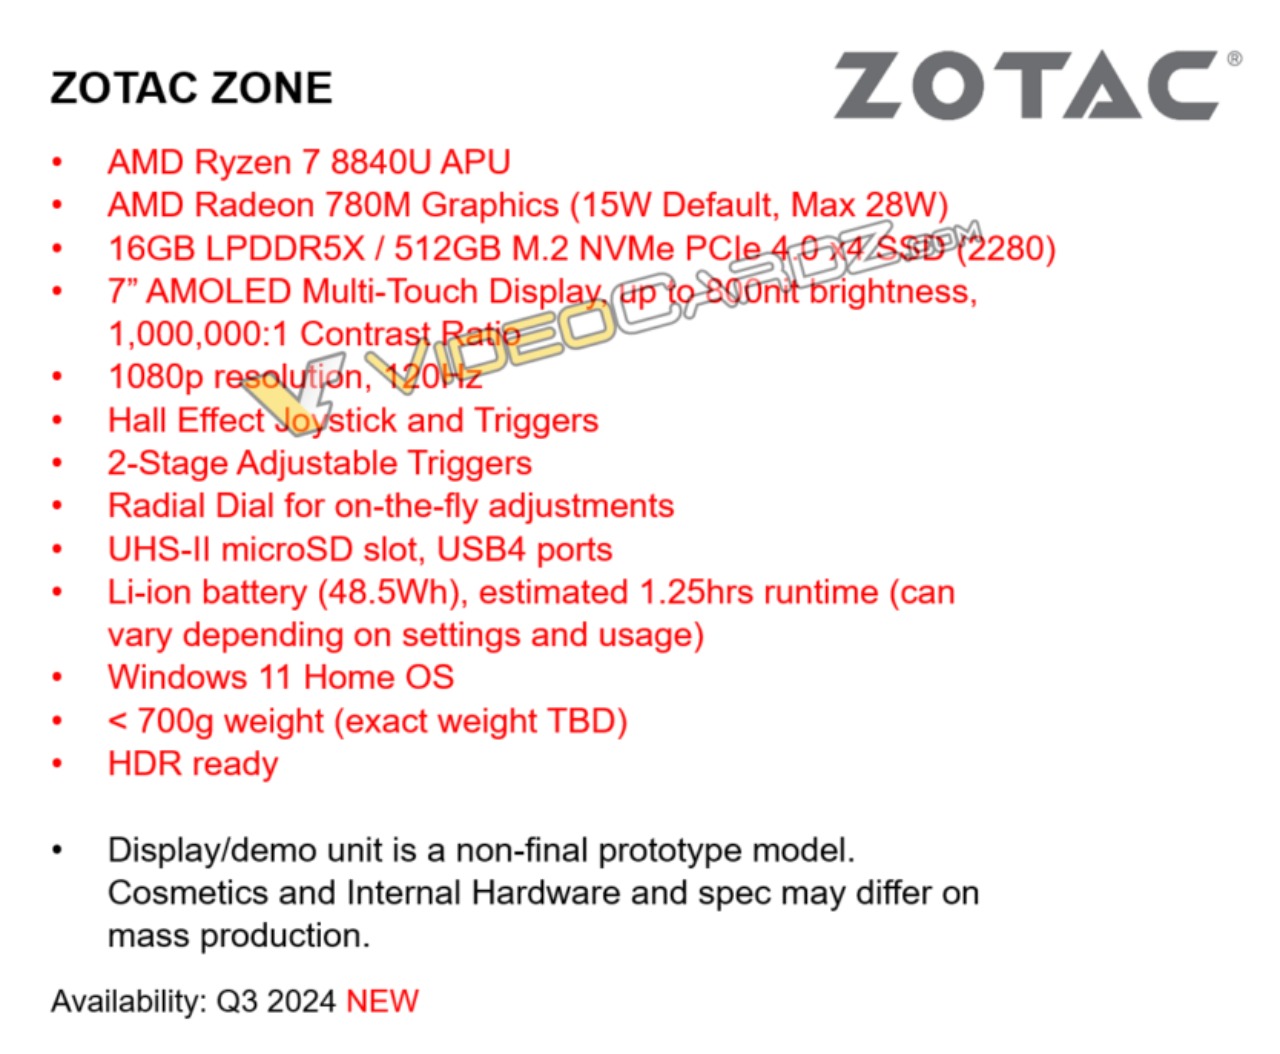 ZOTAC ONE: specifiche tecniche emerse in nuovi leak